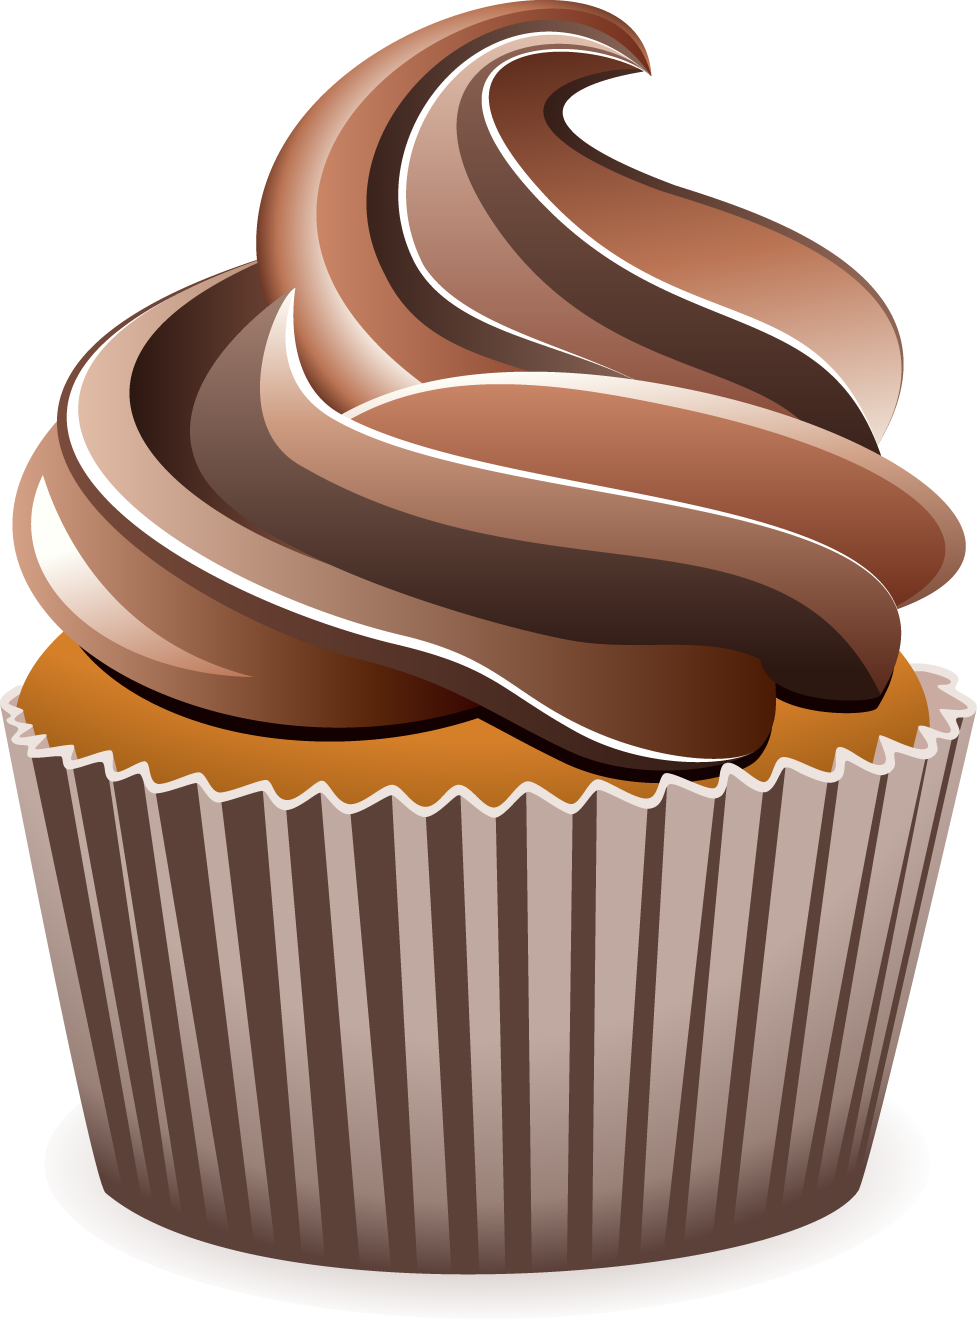 Cupcake clipart free download - Cupcake Images Clip Art Free